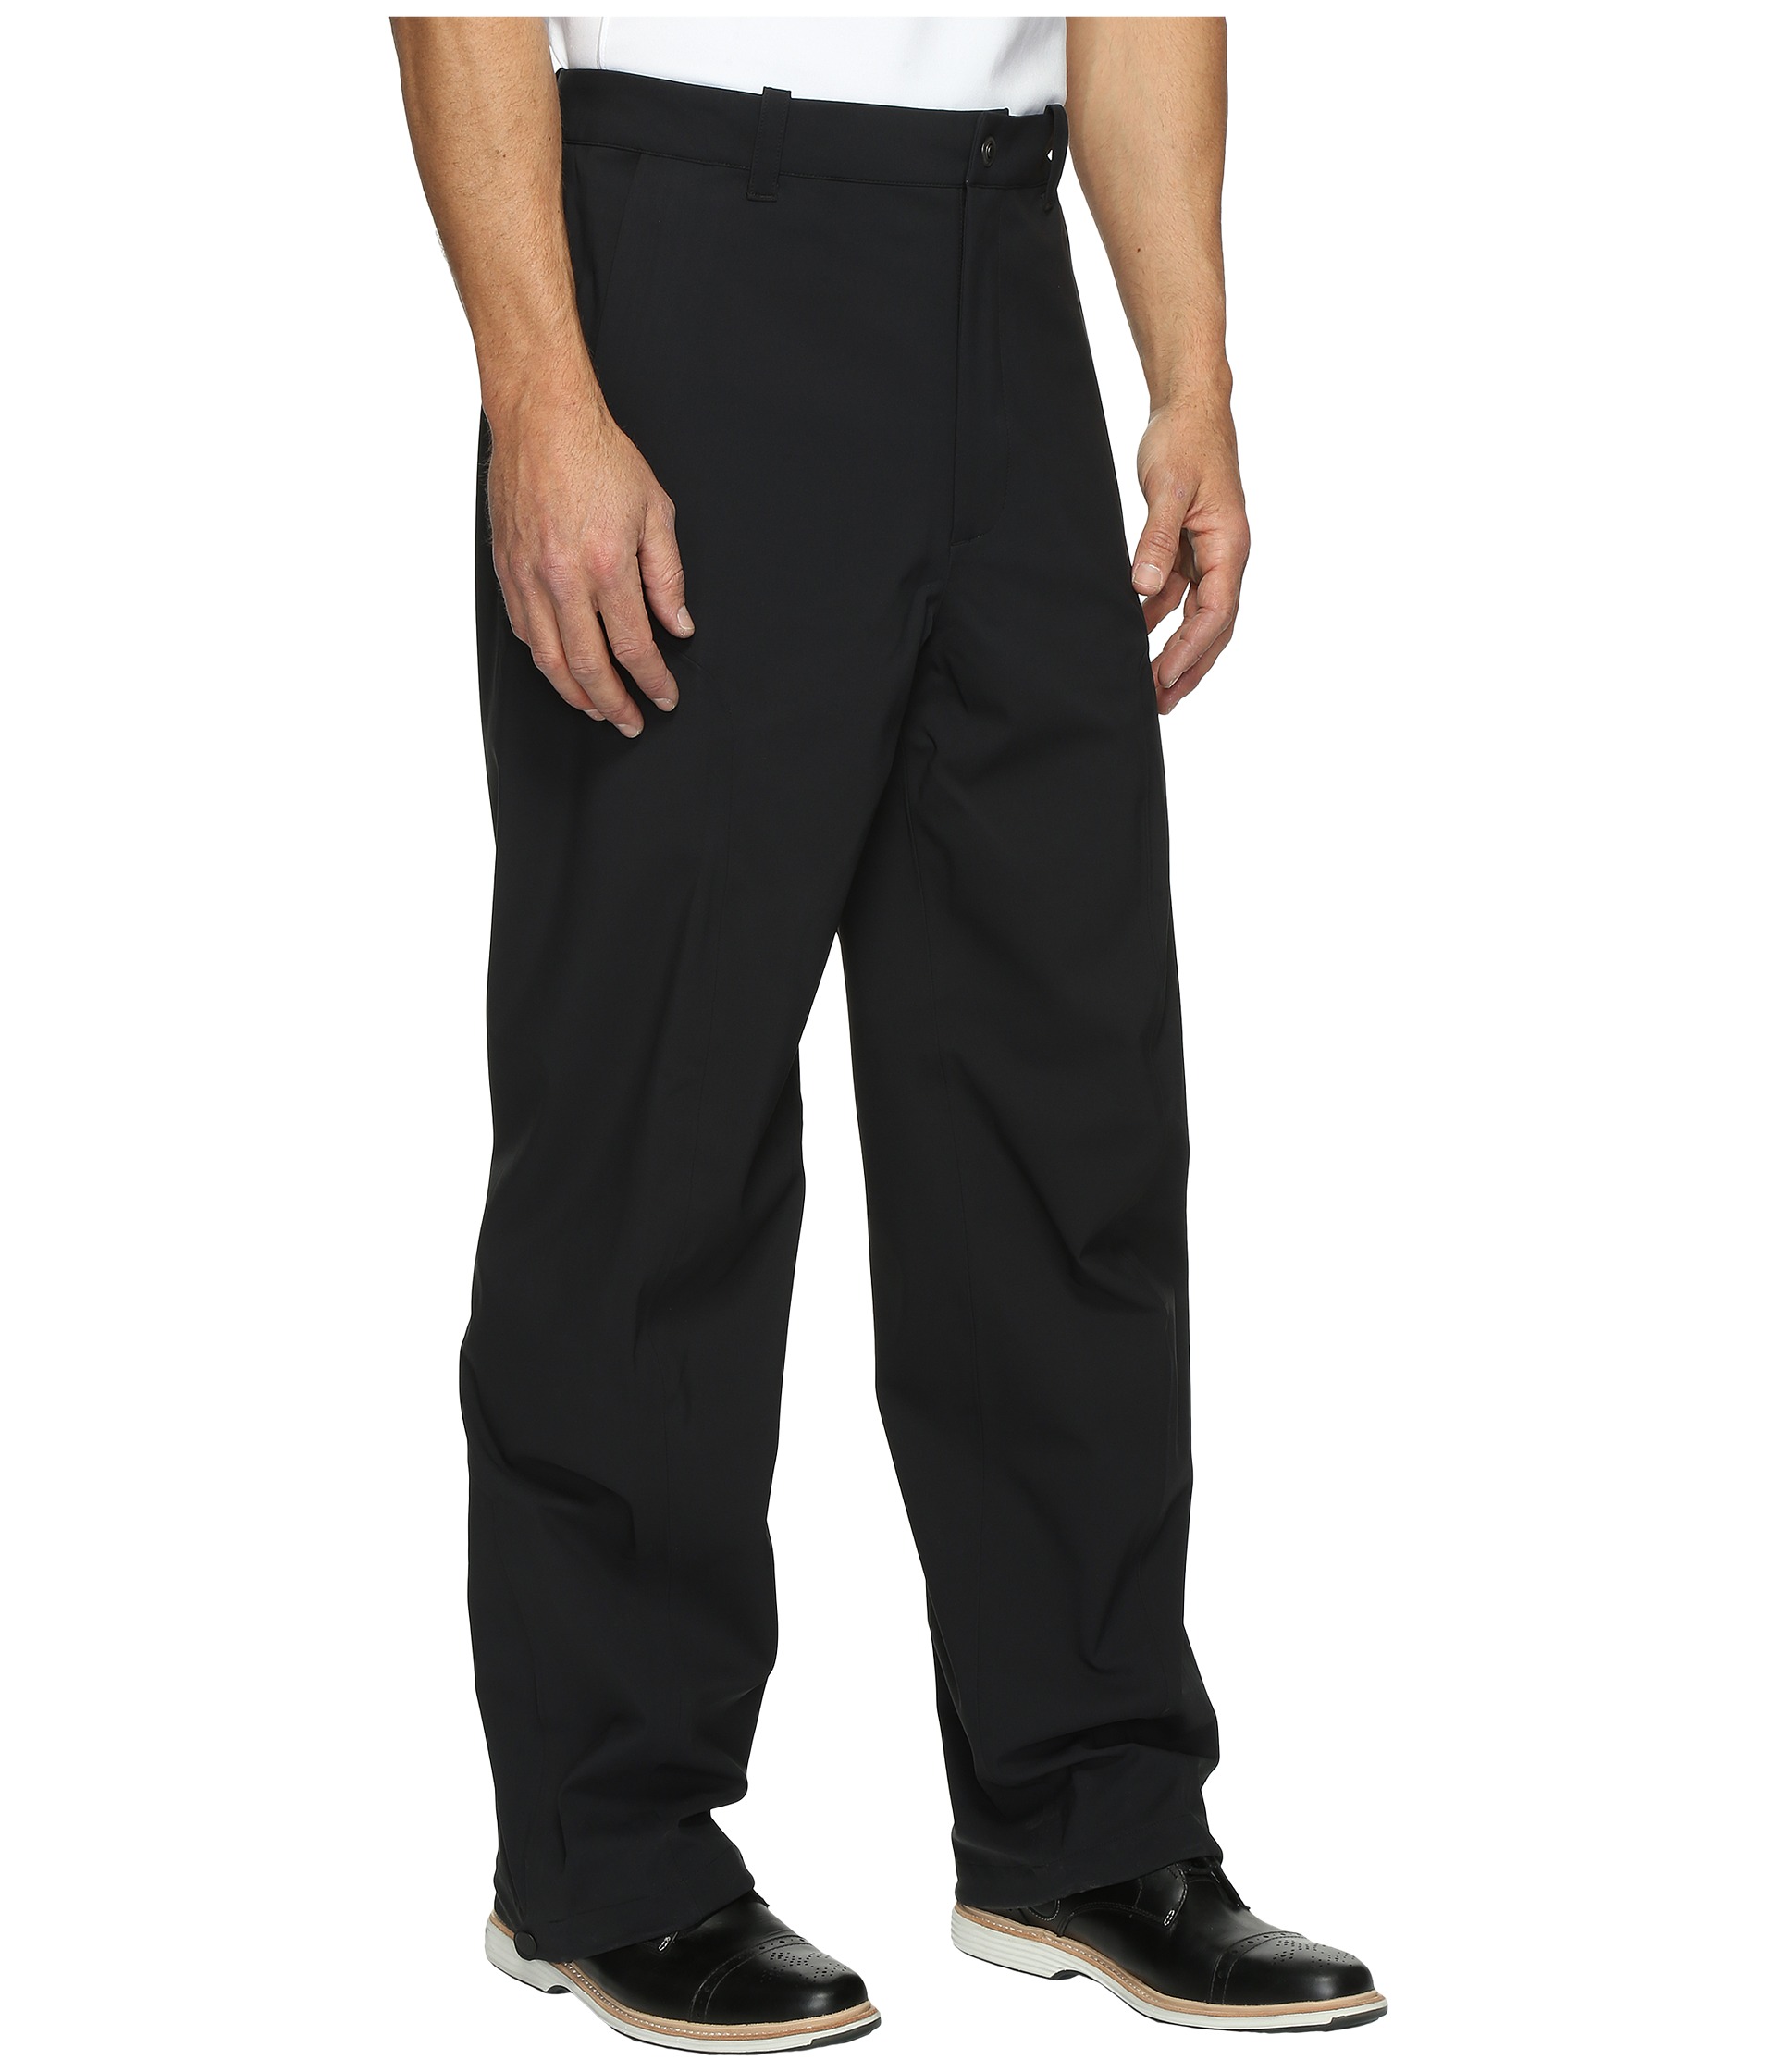 Nike Golf Hyper Storm-Fit Pants - Zappos.com Free Shipping BOTH Ways